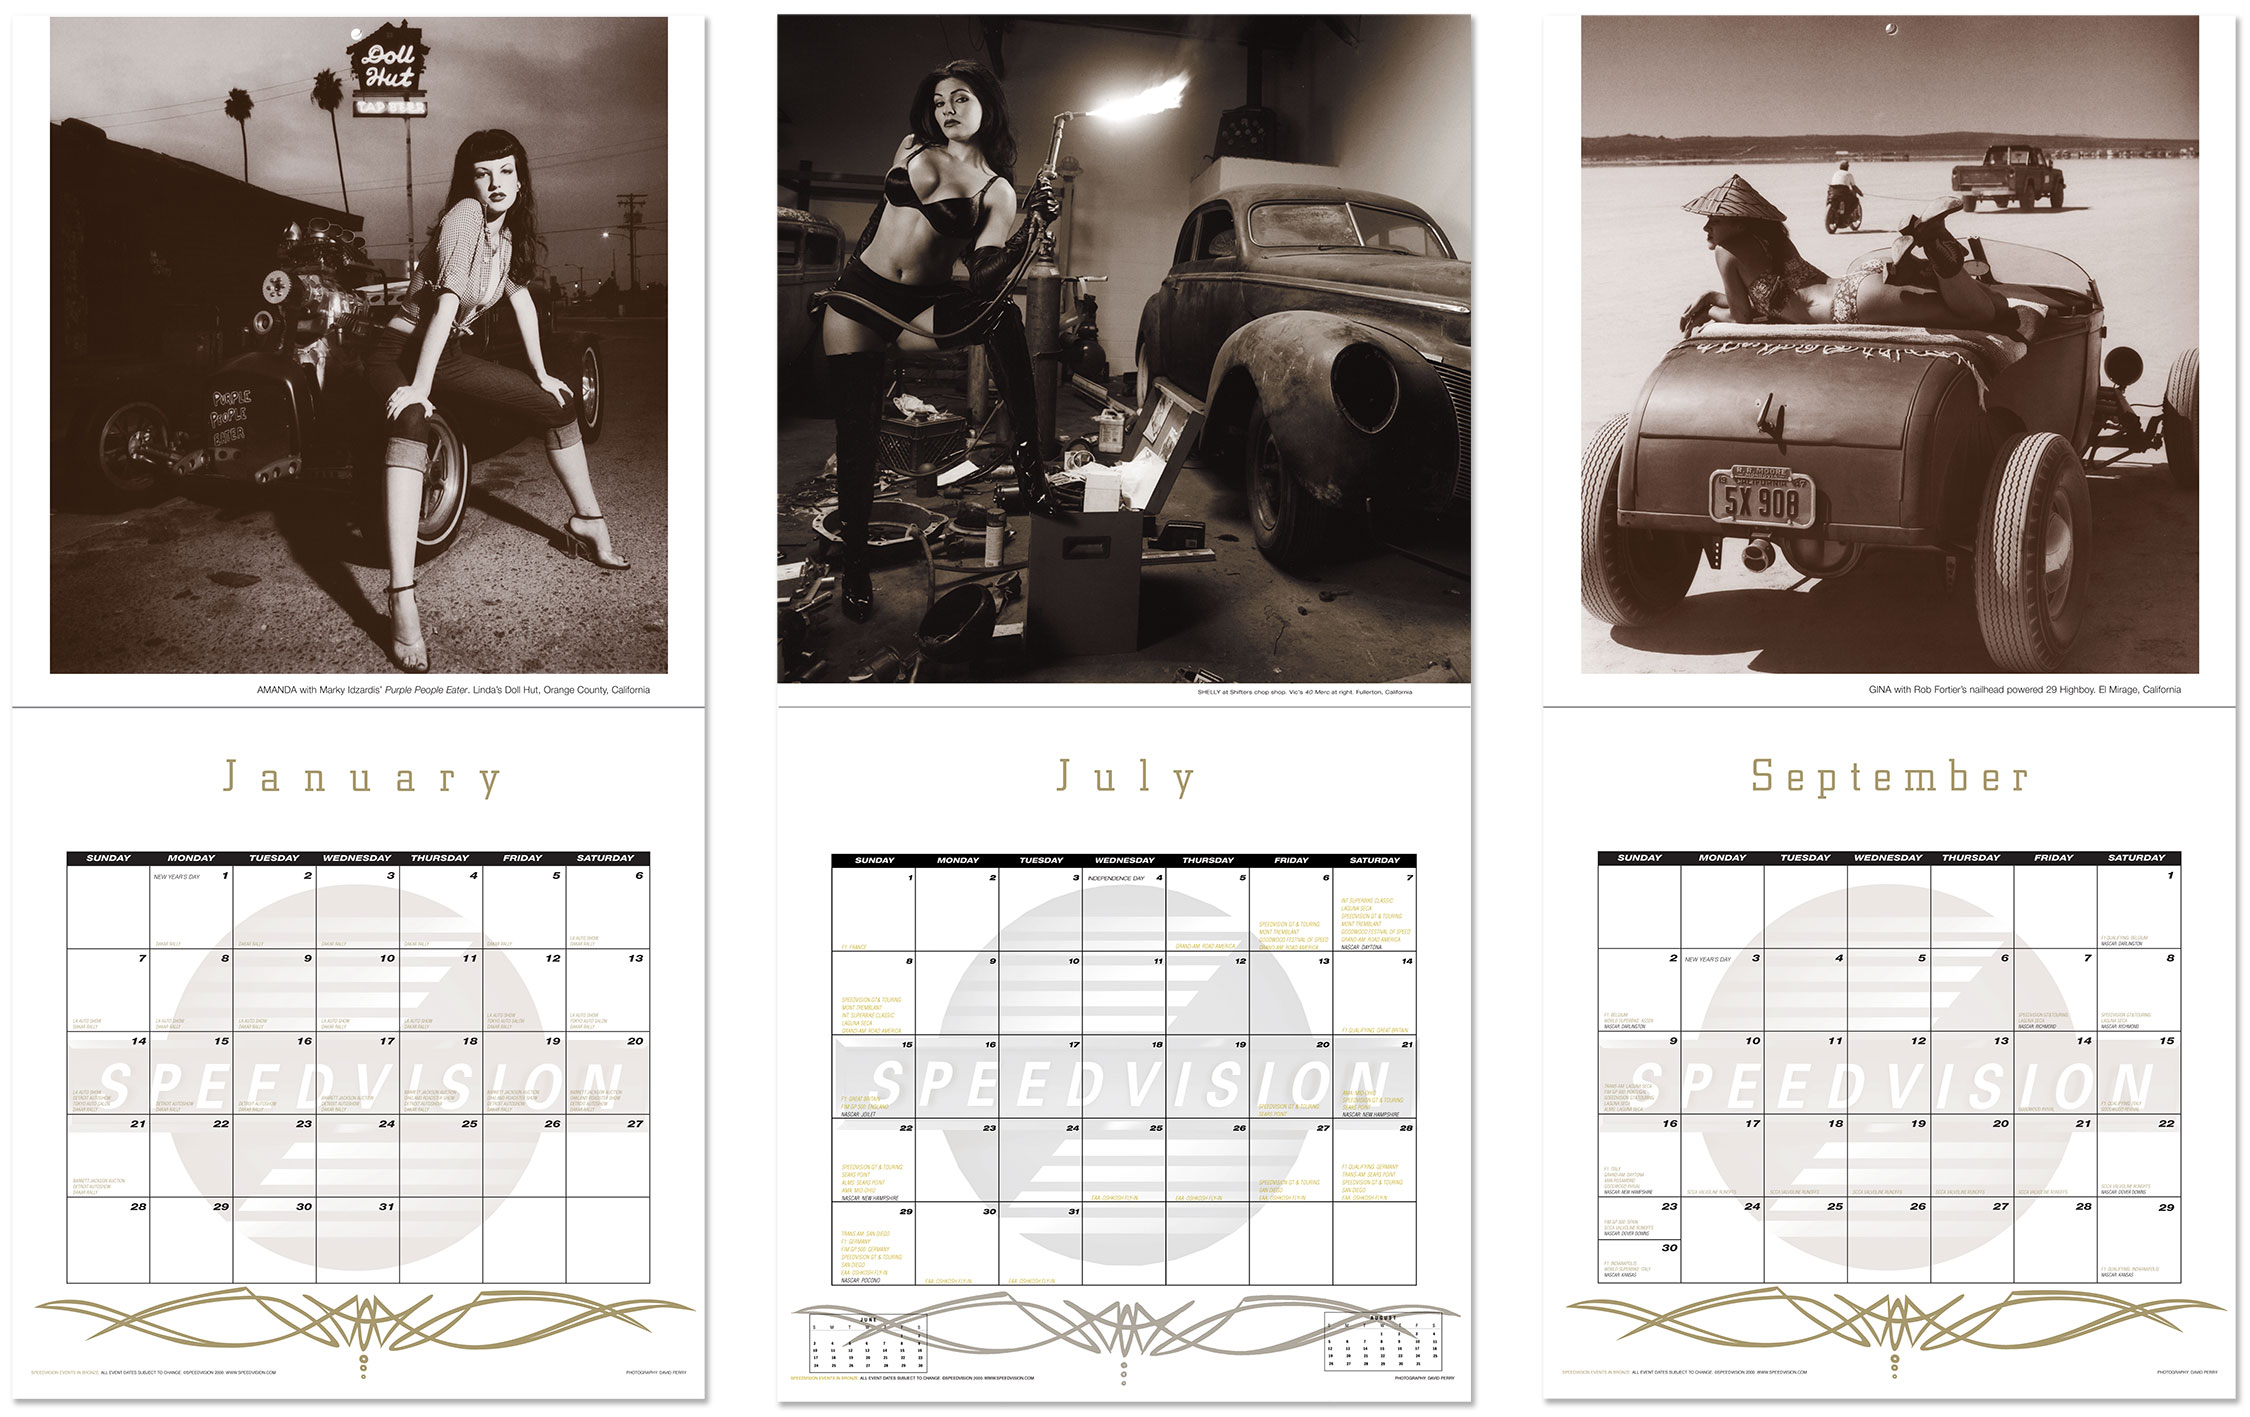 Speedvision Network promotional calendar